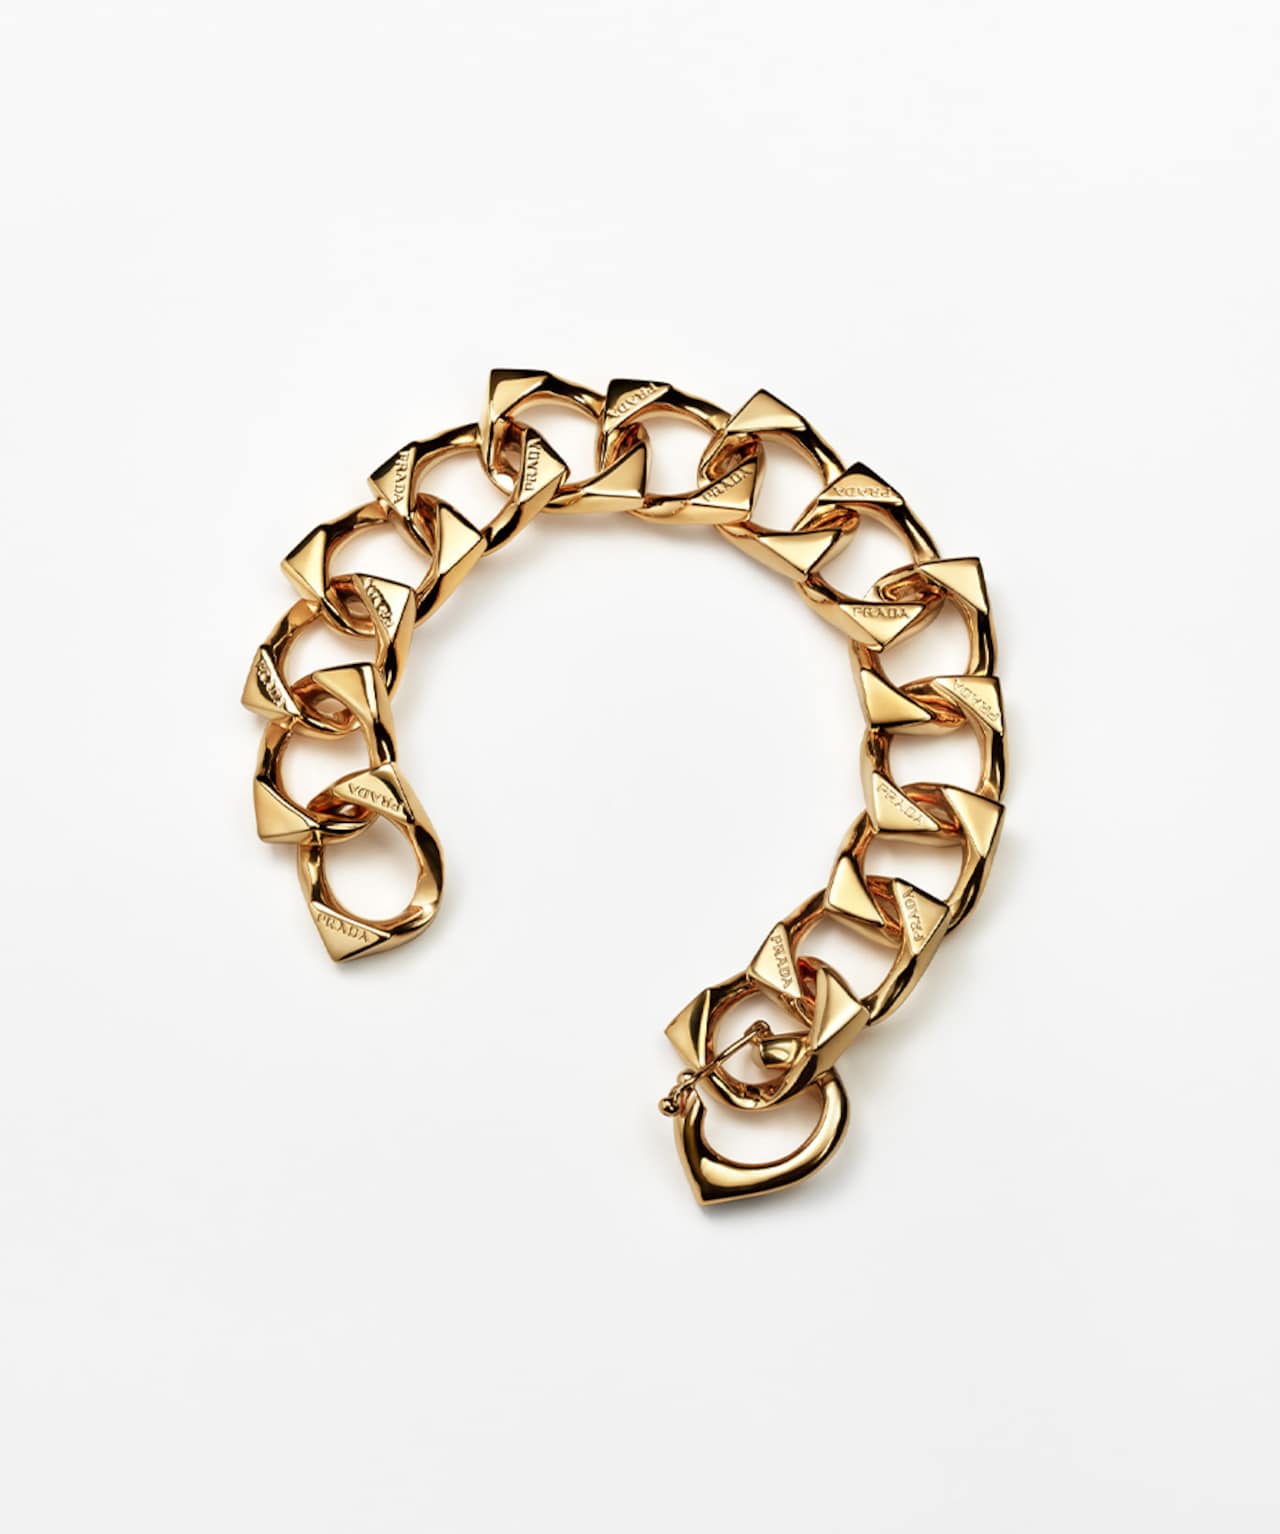 Prada Eternal Gold Chain Bracelet